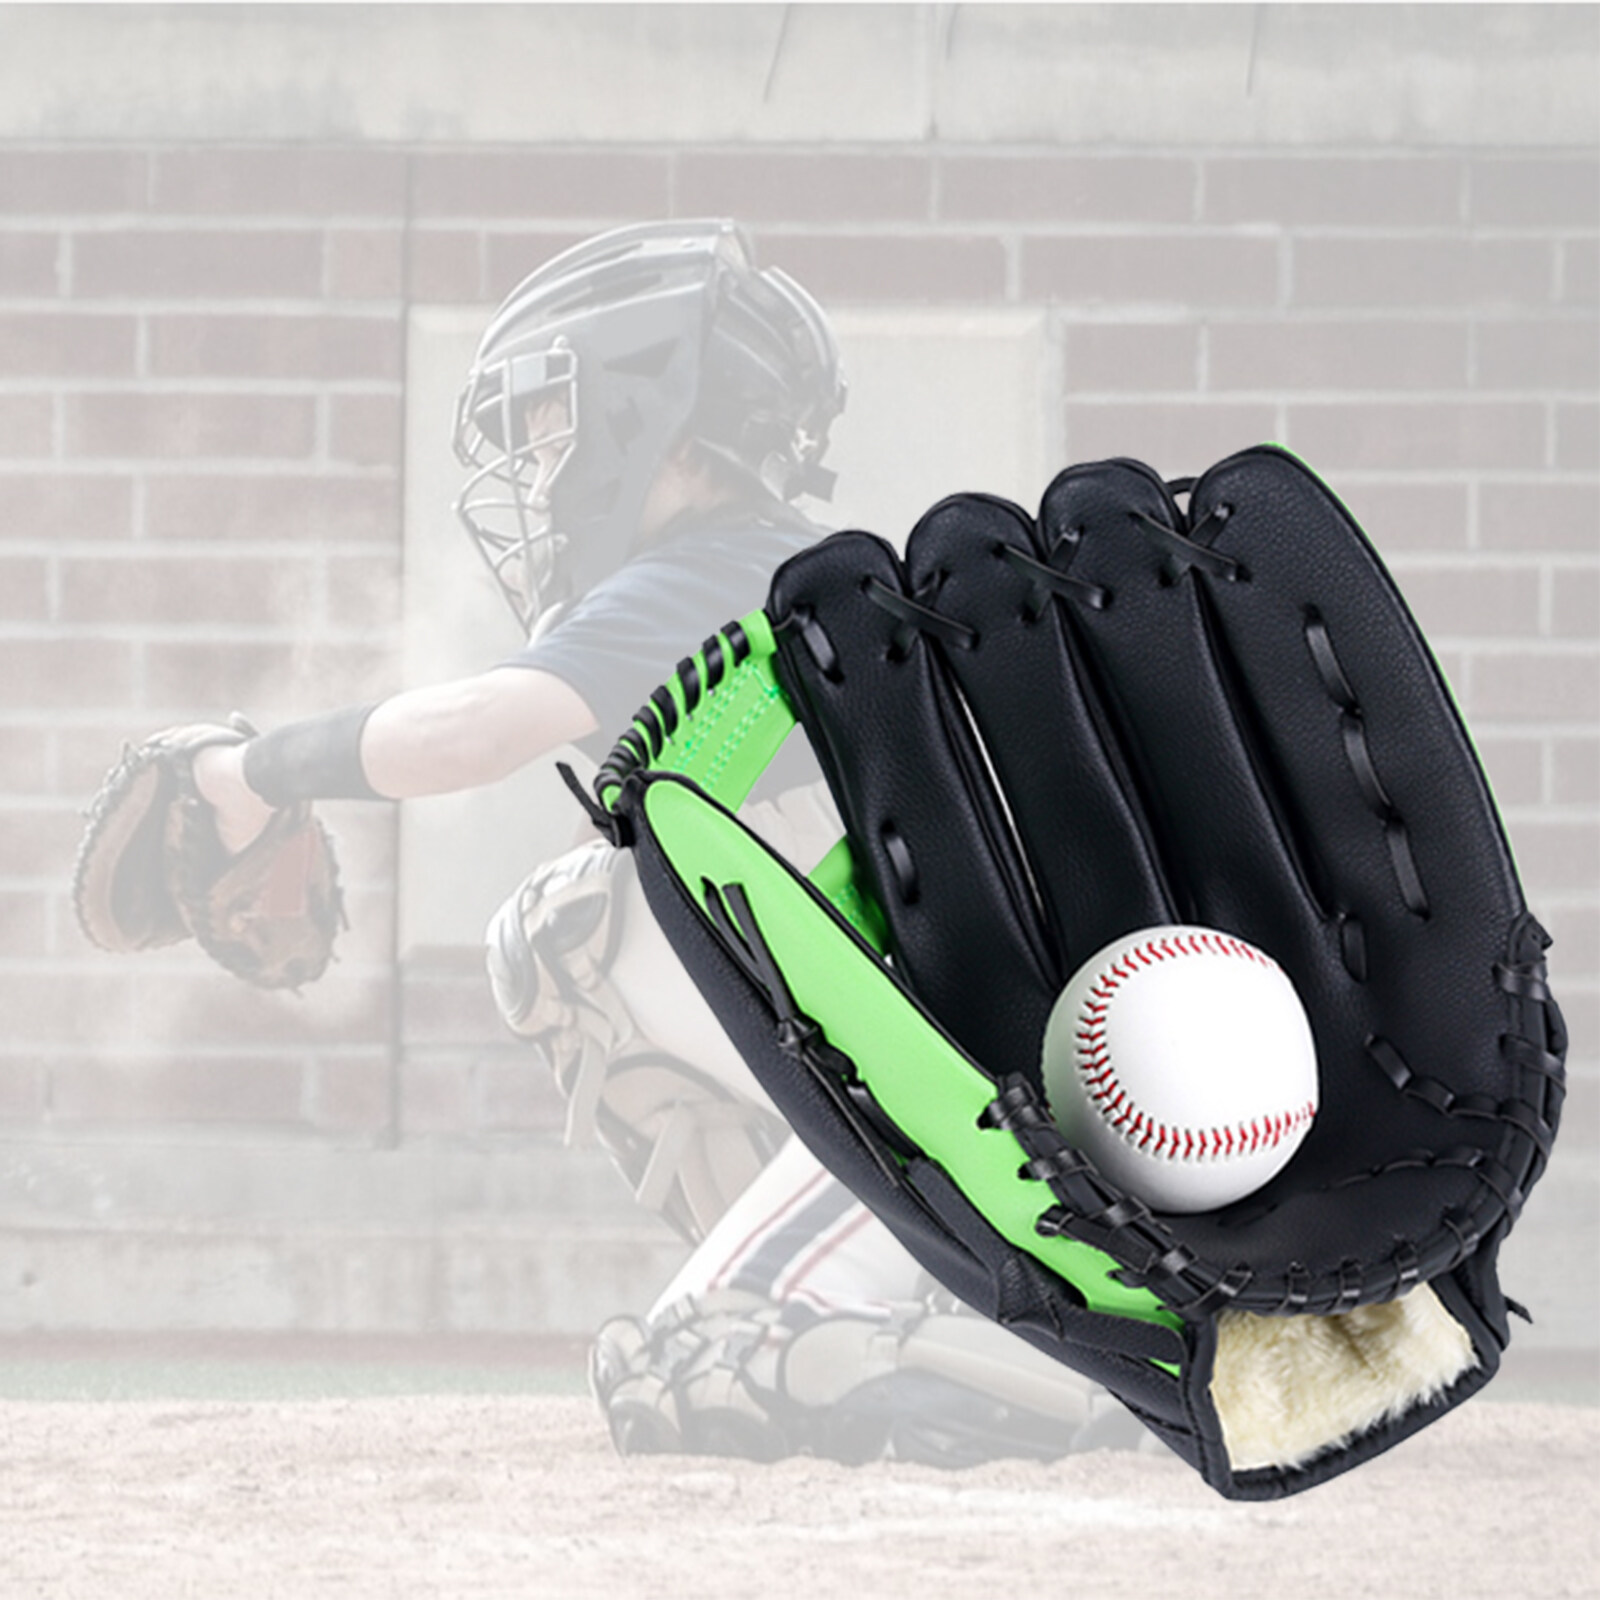 DYNWAVE Premium ถุงมือเบสบอลนุ่มหนานุ่มซอฟต์บอล Teeball ถุงมือถุงมือซอฟต์บอล